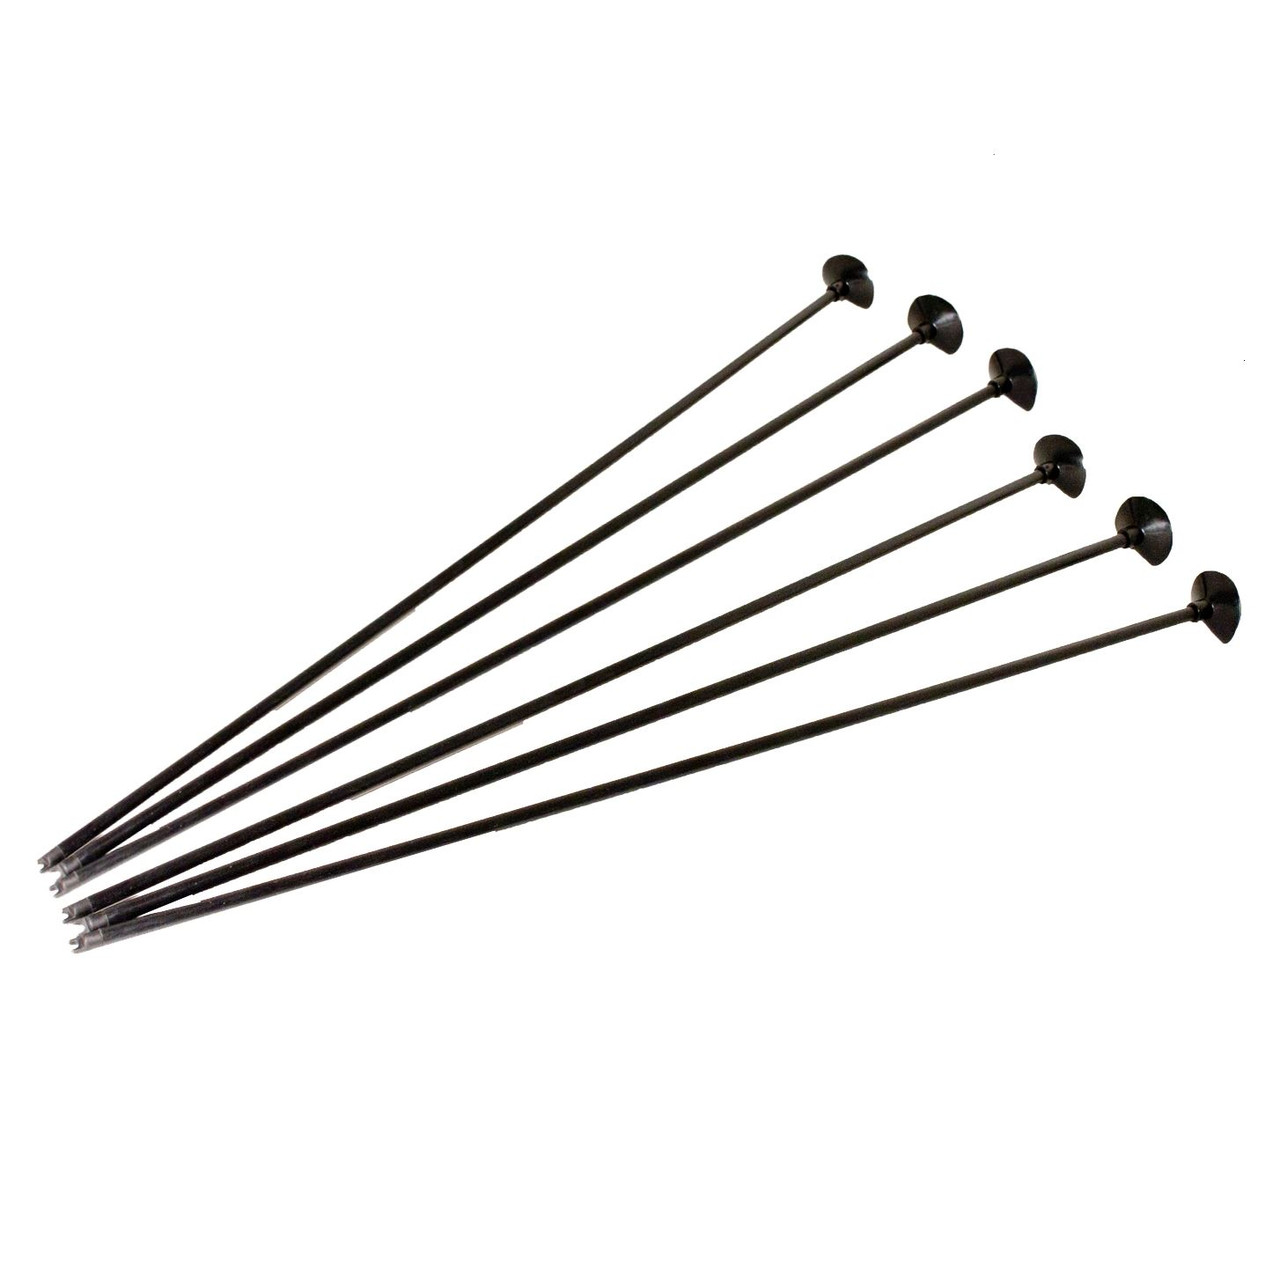 Petron Stealth Archery Set with 6x Sucker Tip Arrows